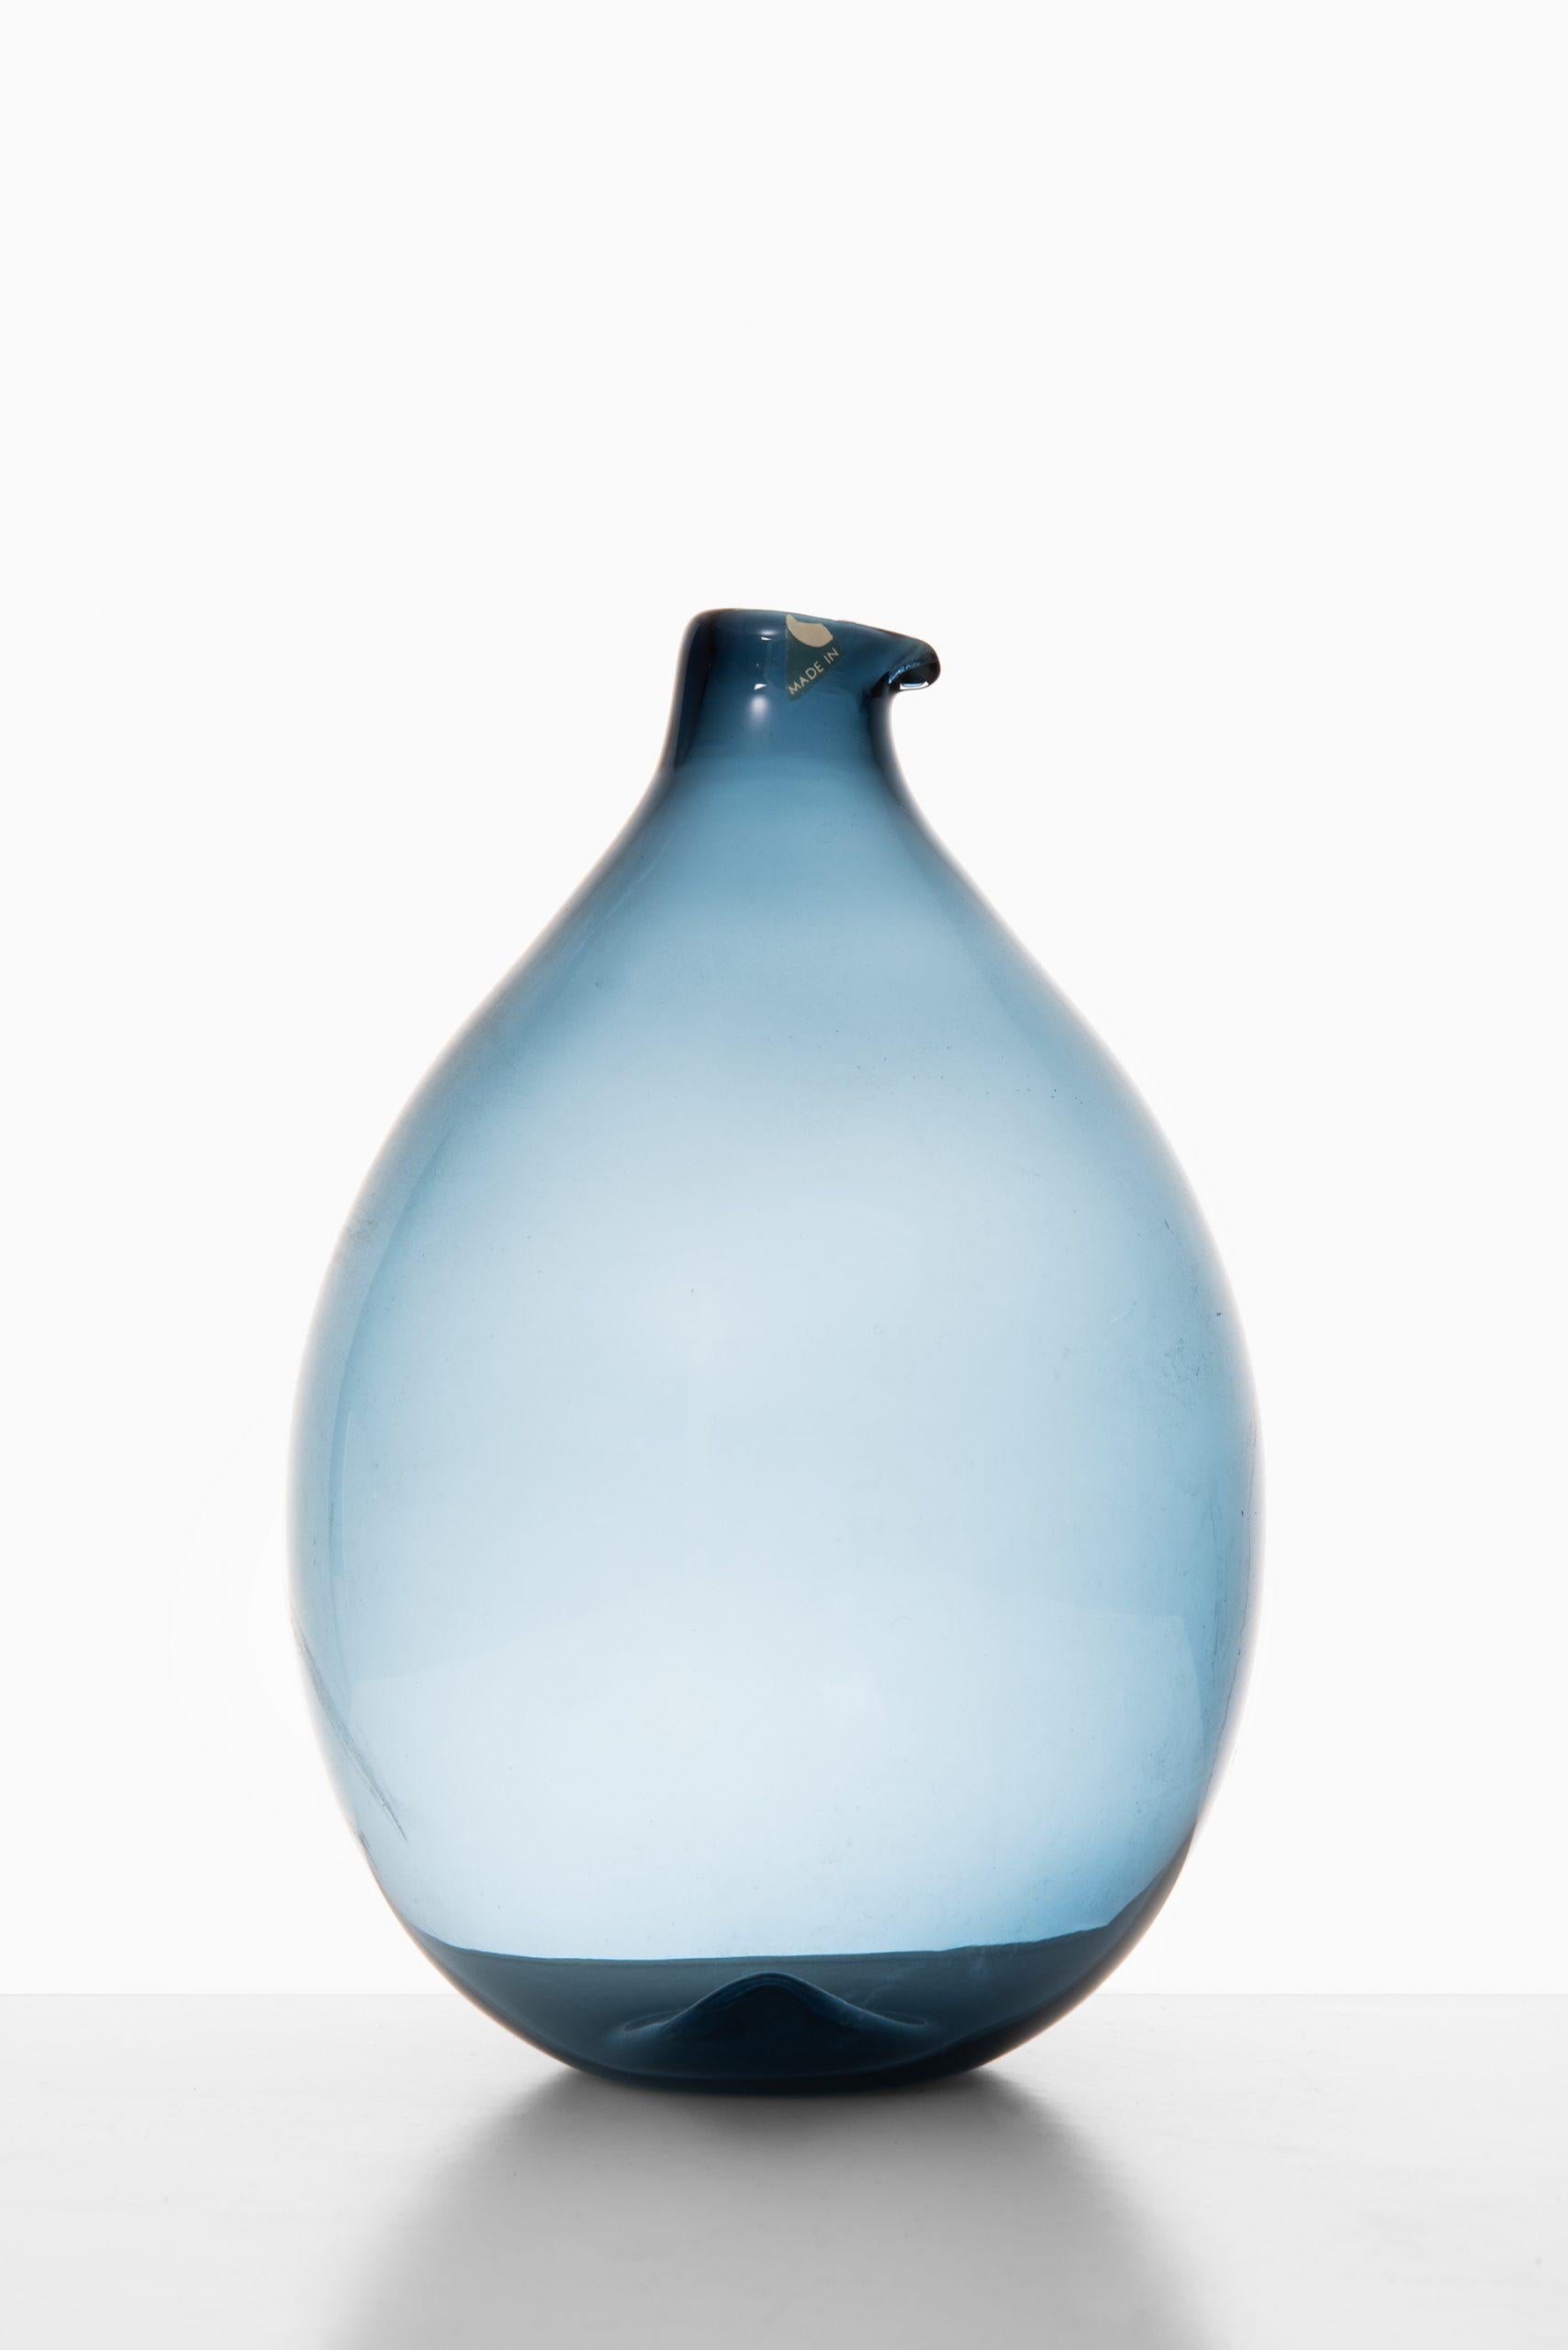 Scandinavian Modern Timo Sarpaneva Bottle / Vase Model Pullo / Bird Vase by Iittala in Finland For Sale